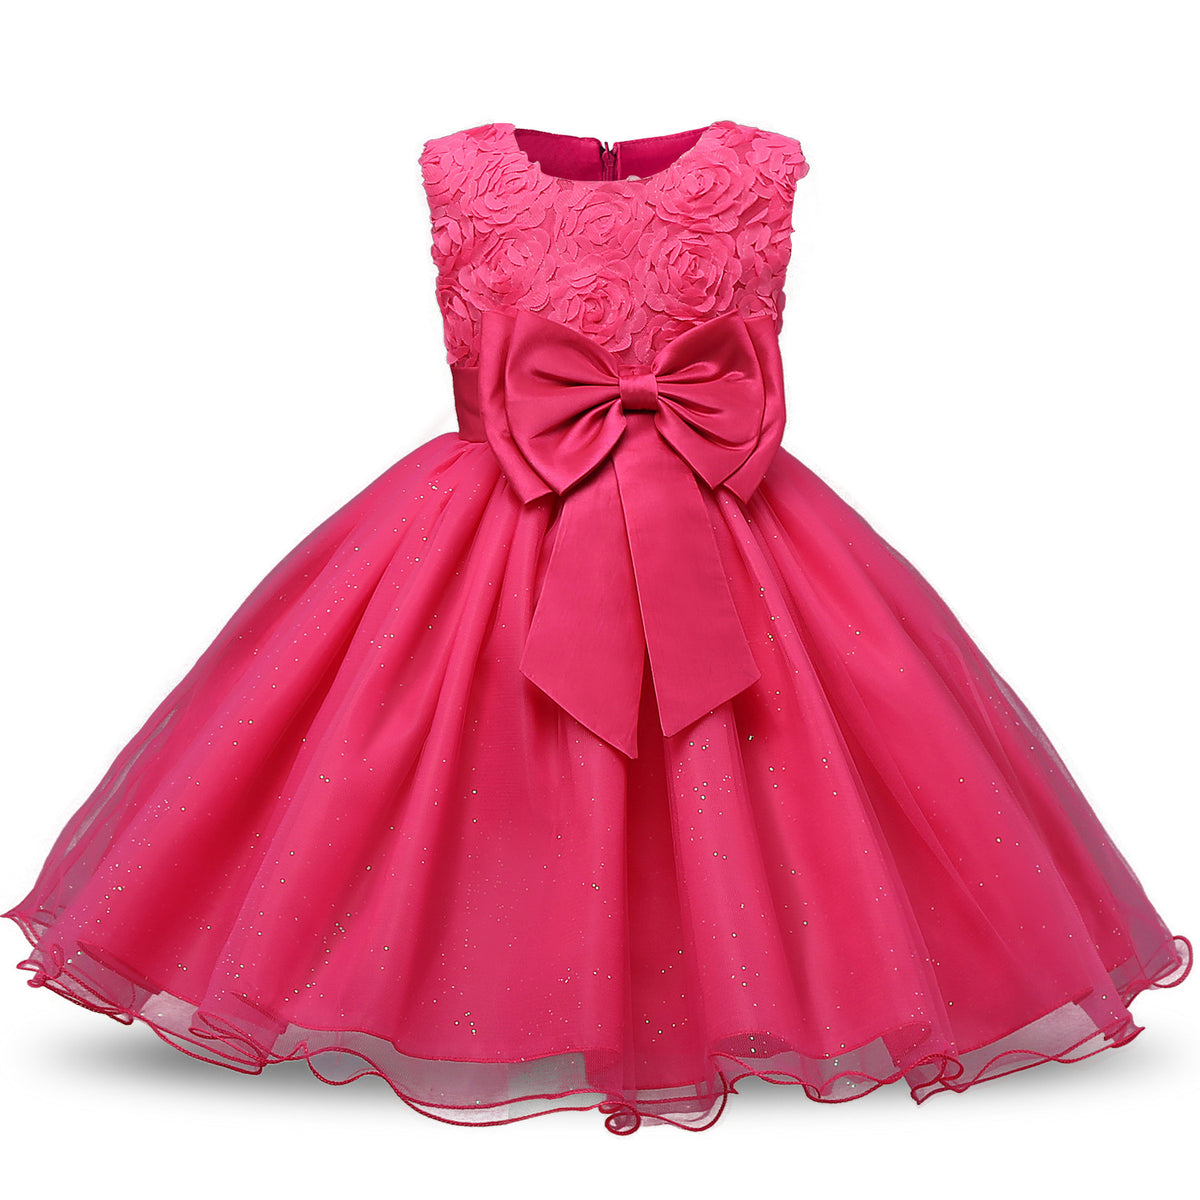 Rose child dress dress